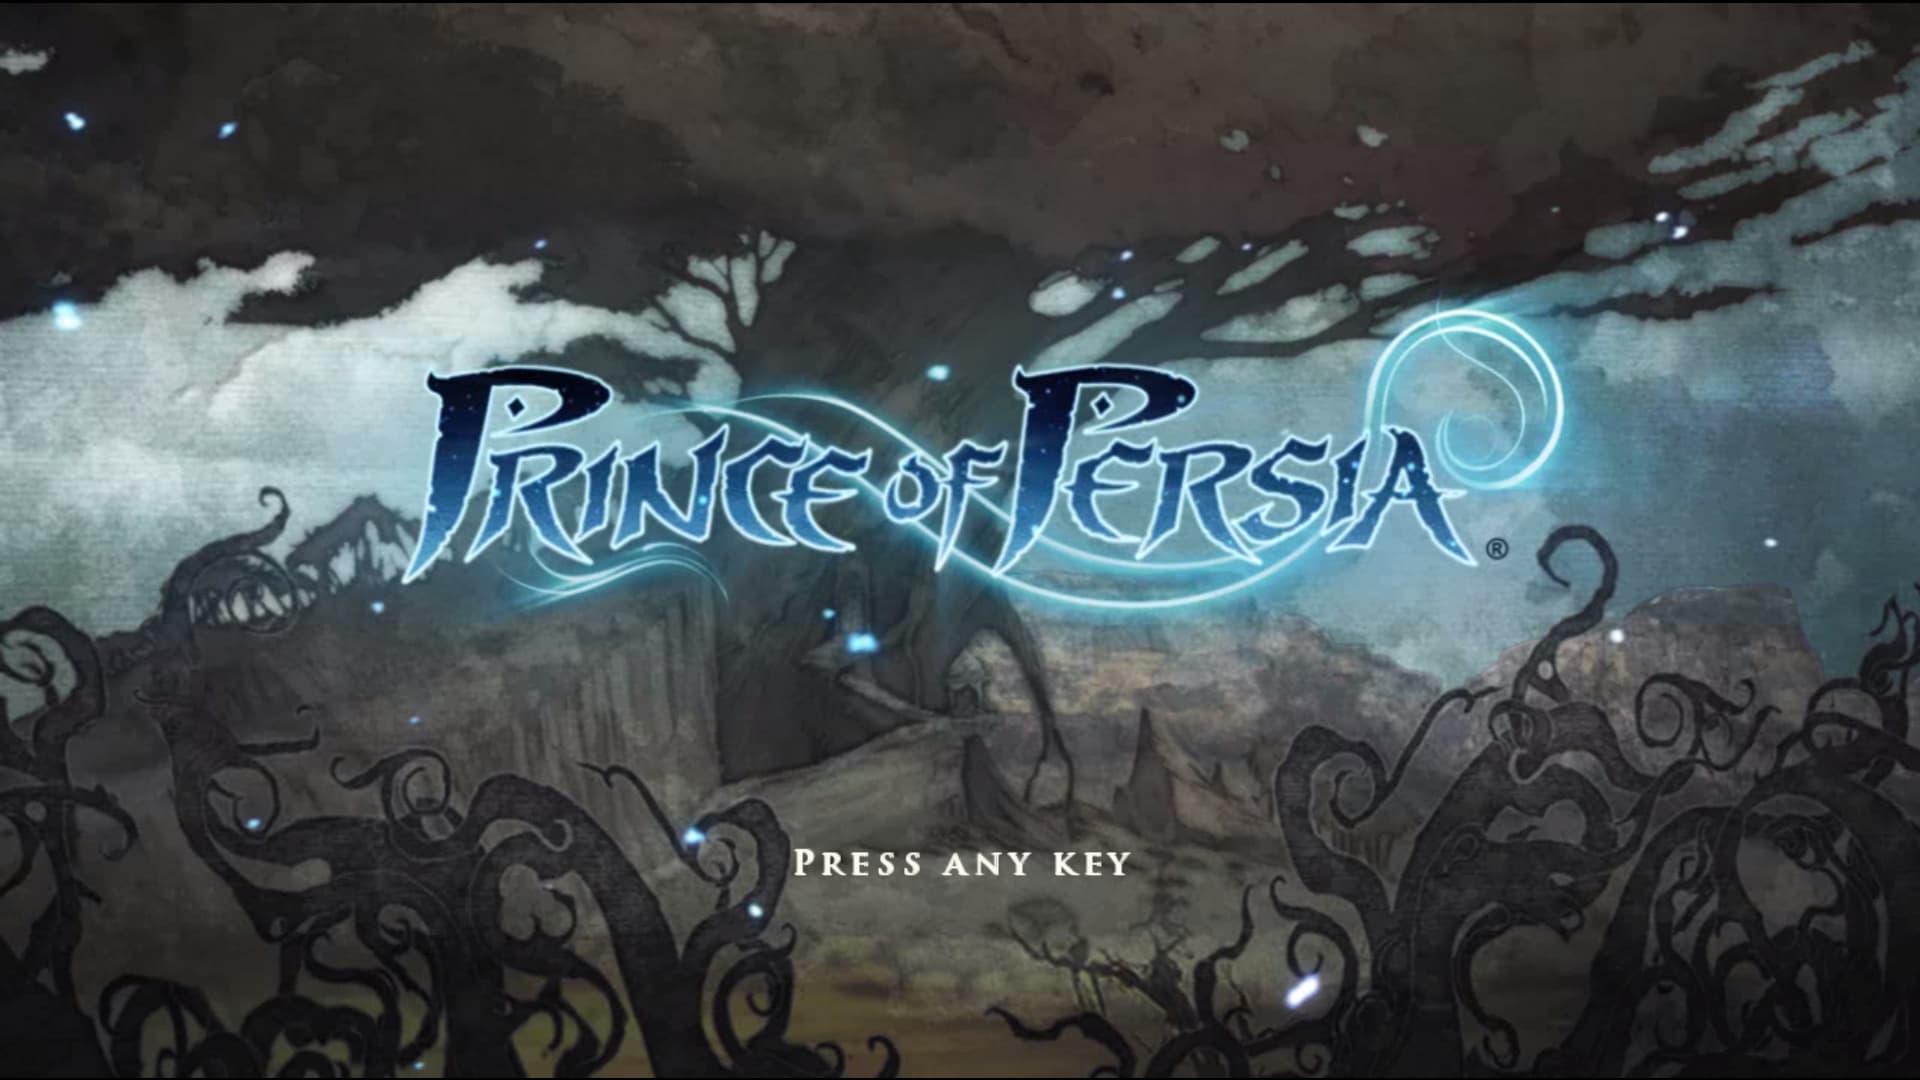 Prince of Persia ,captura hecha a mano